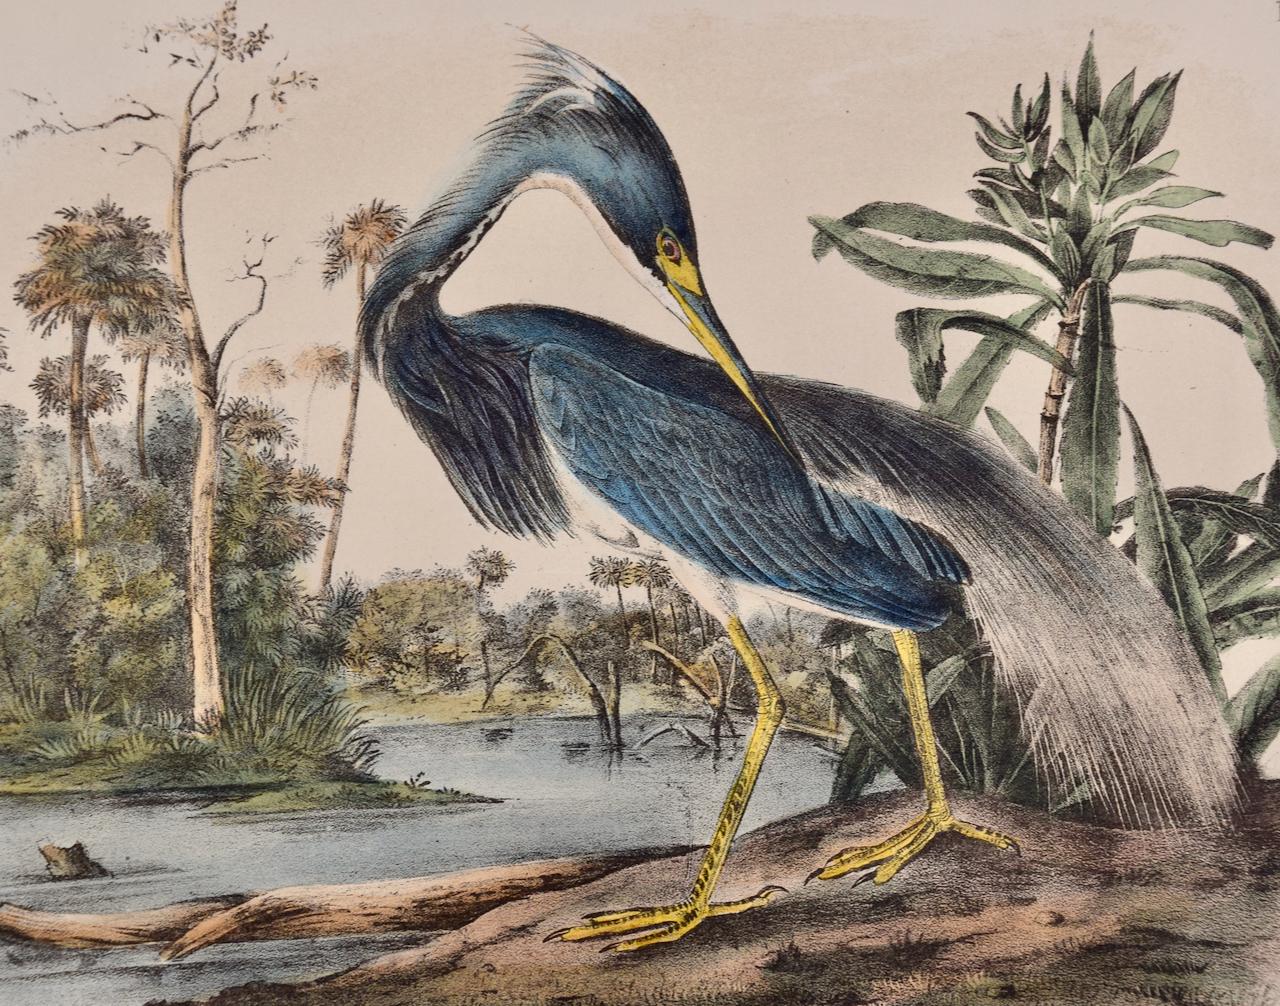 Louisiana Heron: An Original 19th C. Audubon Hand-colored Bird Lithograph - Print by John James Audubon